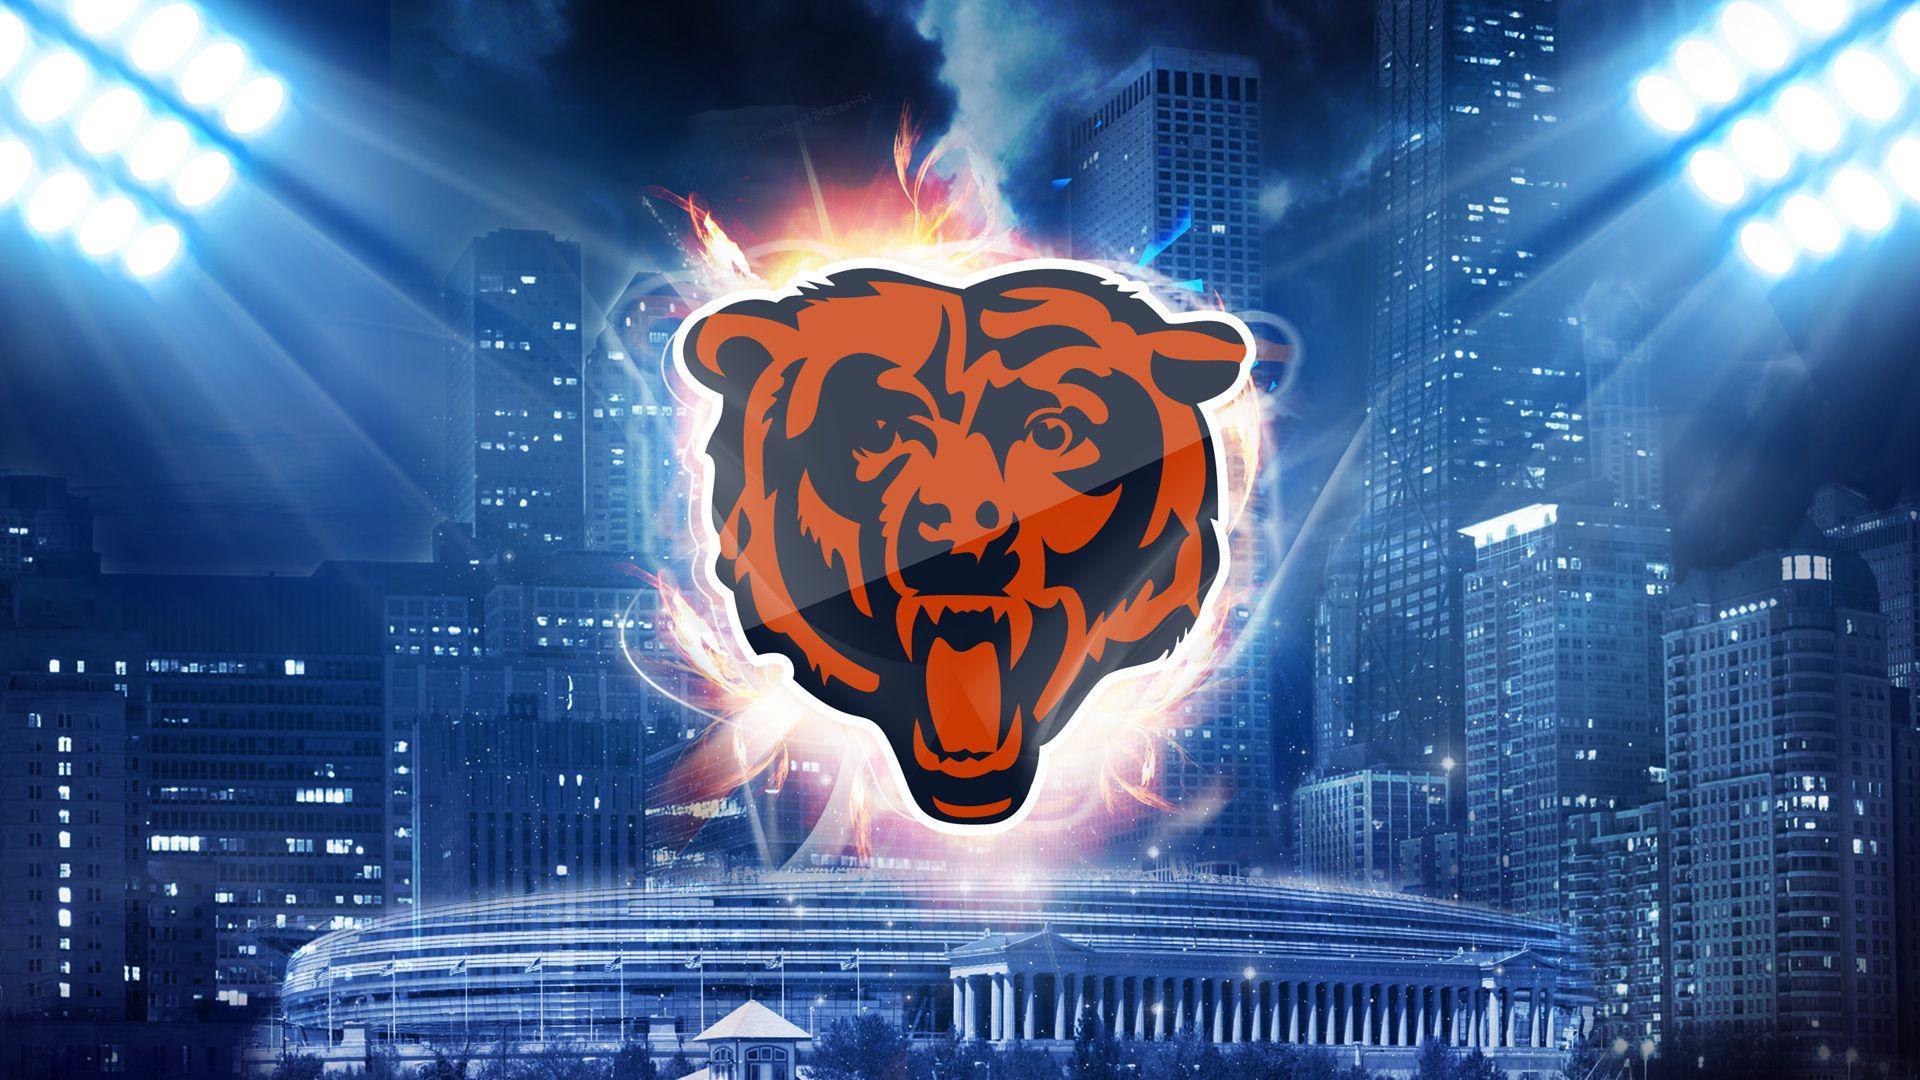 HD Chicago Bears Wallpaper